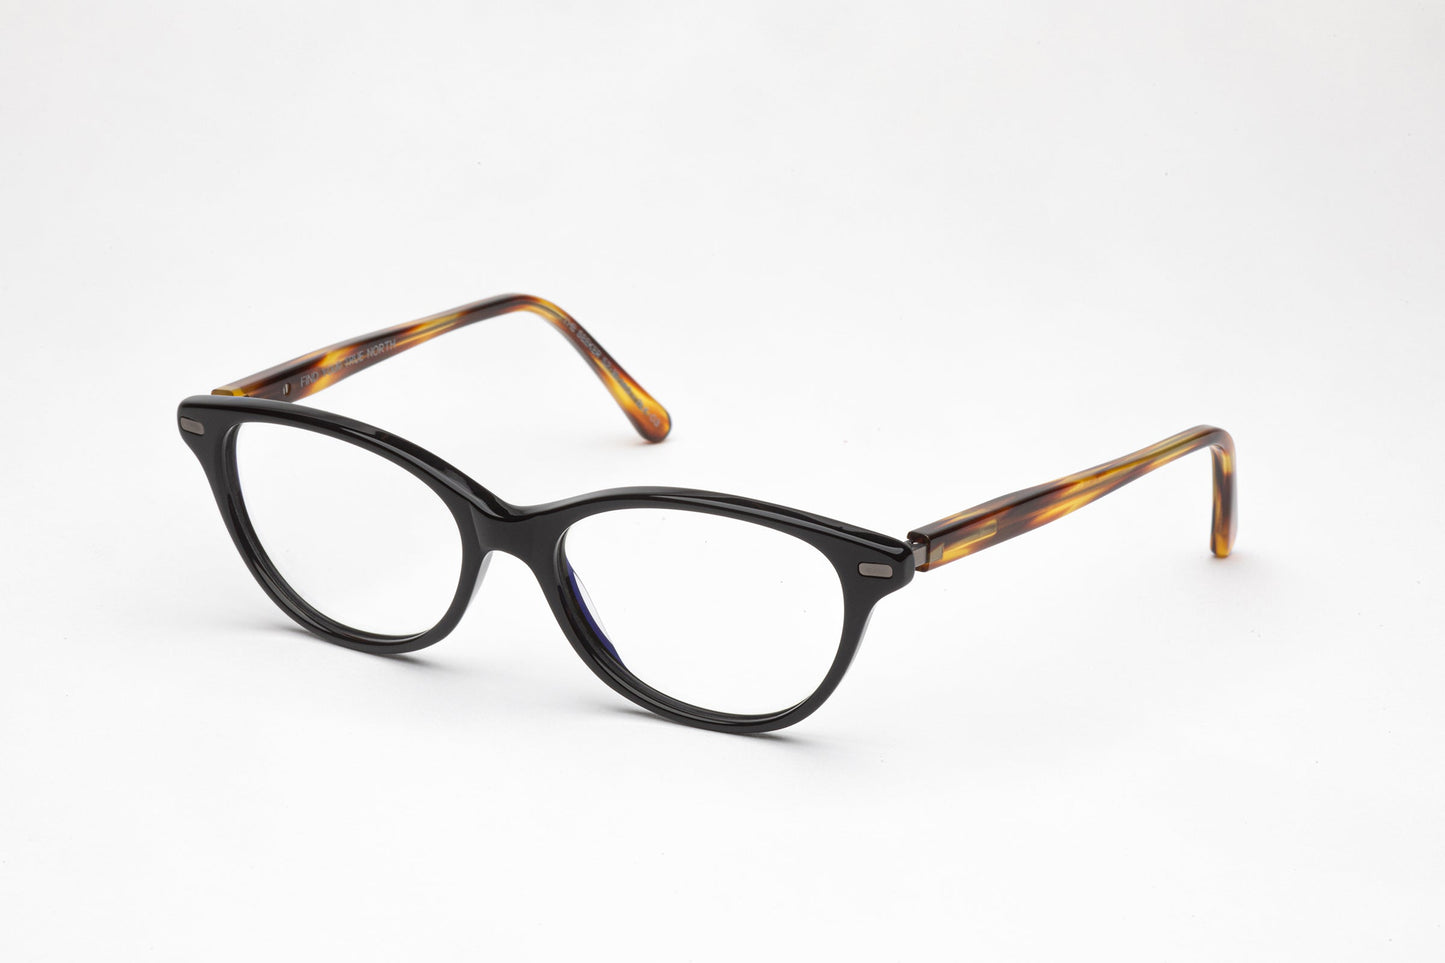 Angled view - Black cateye glasses with tortoiseshell stems